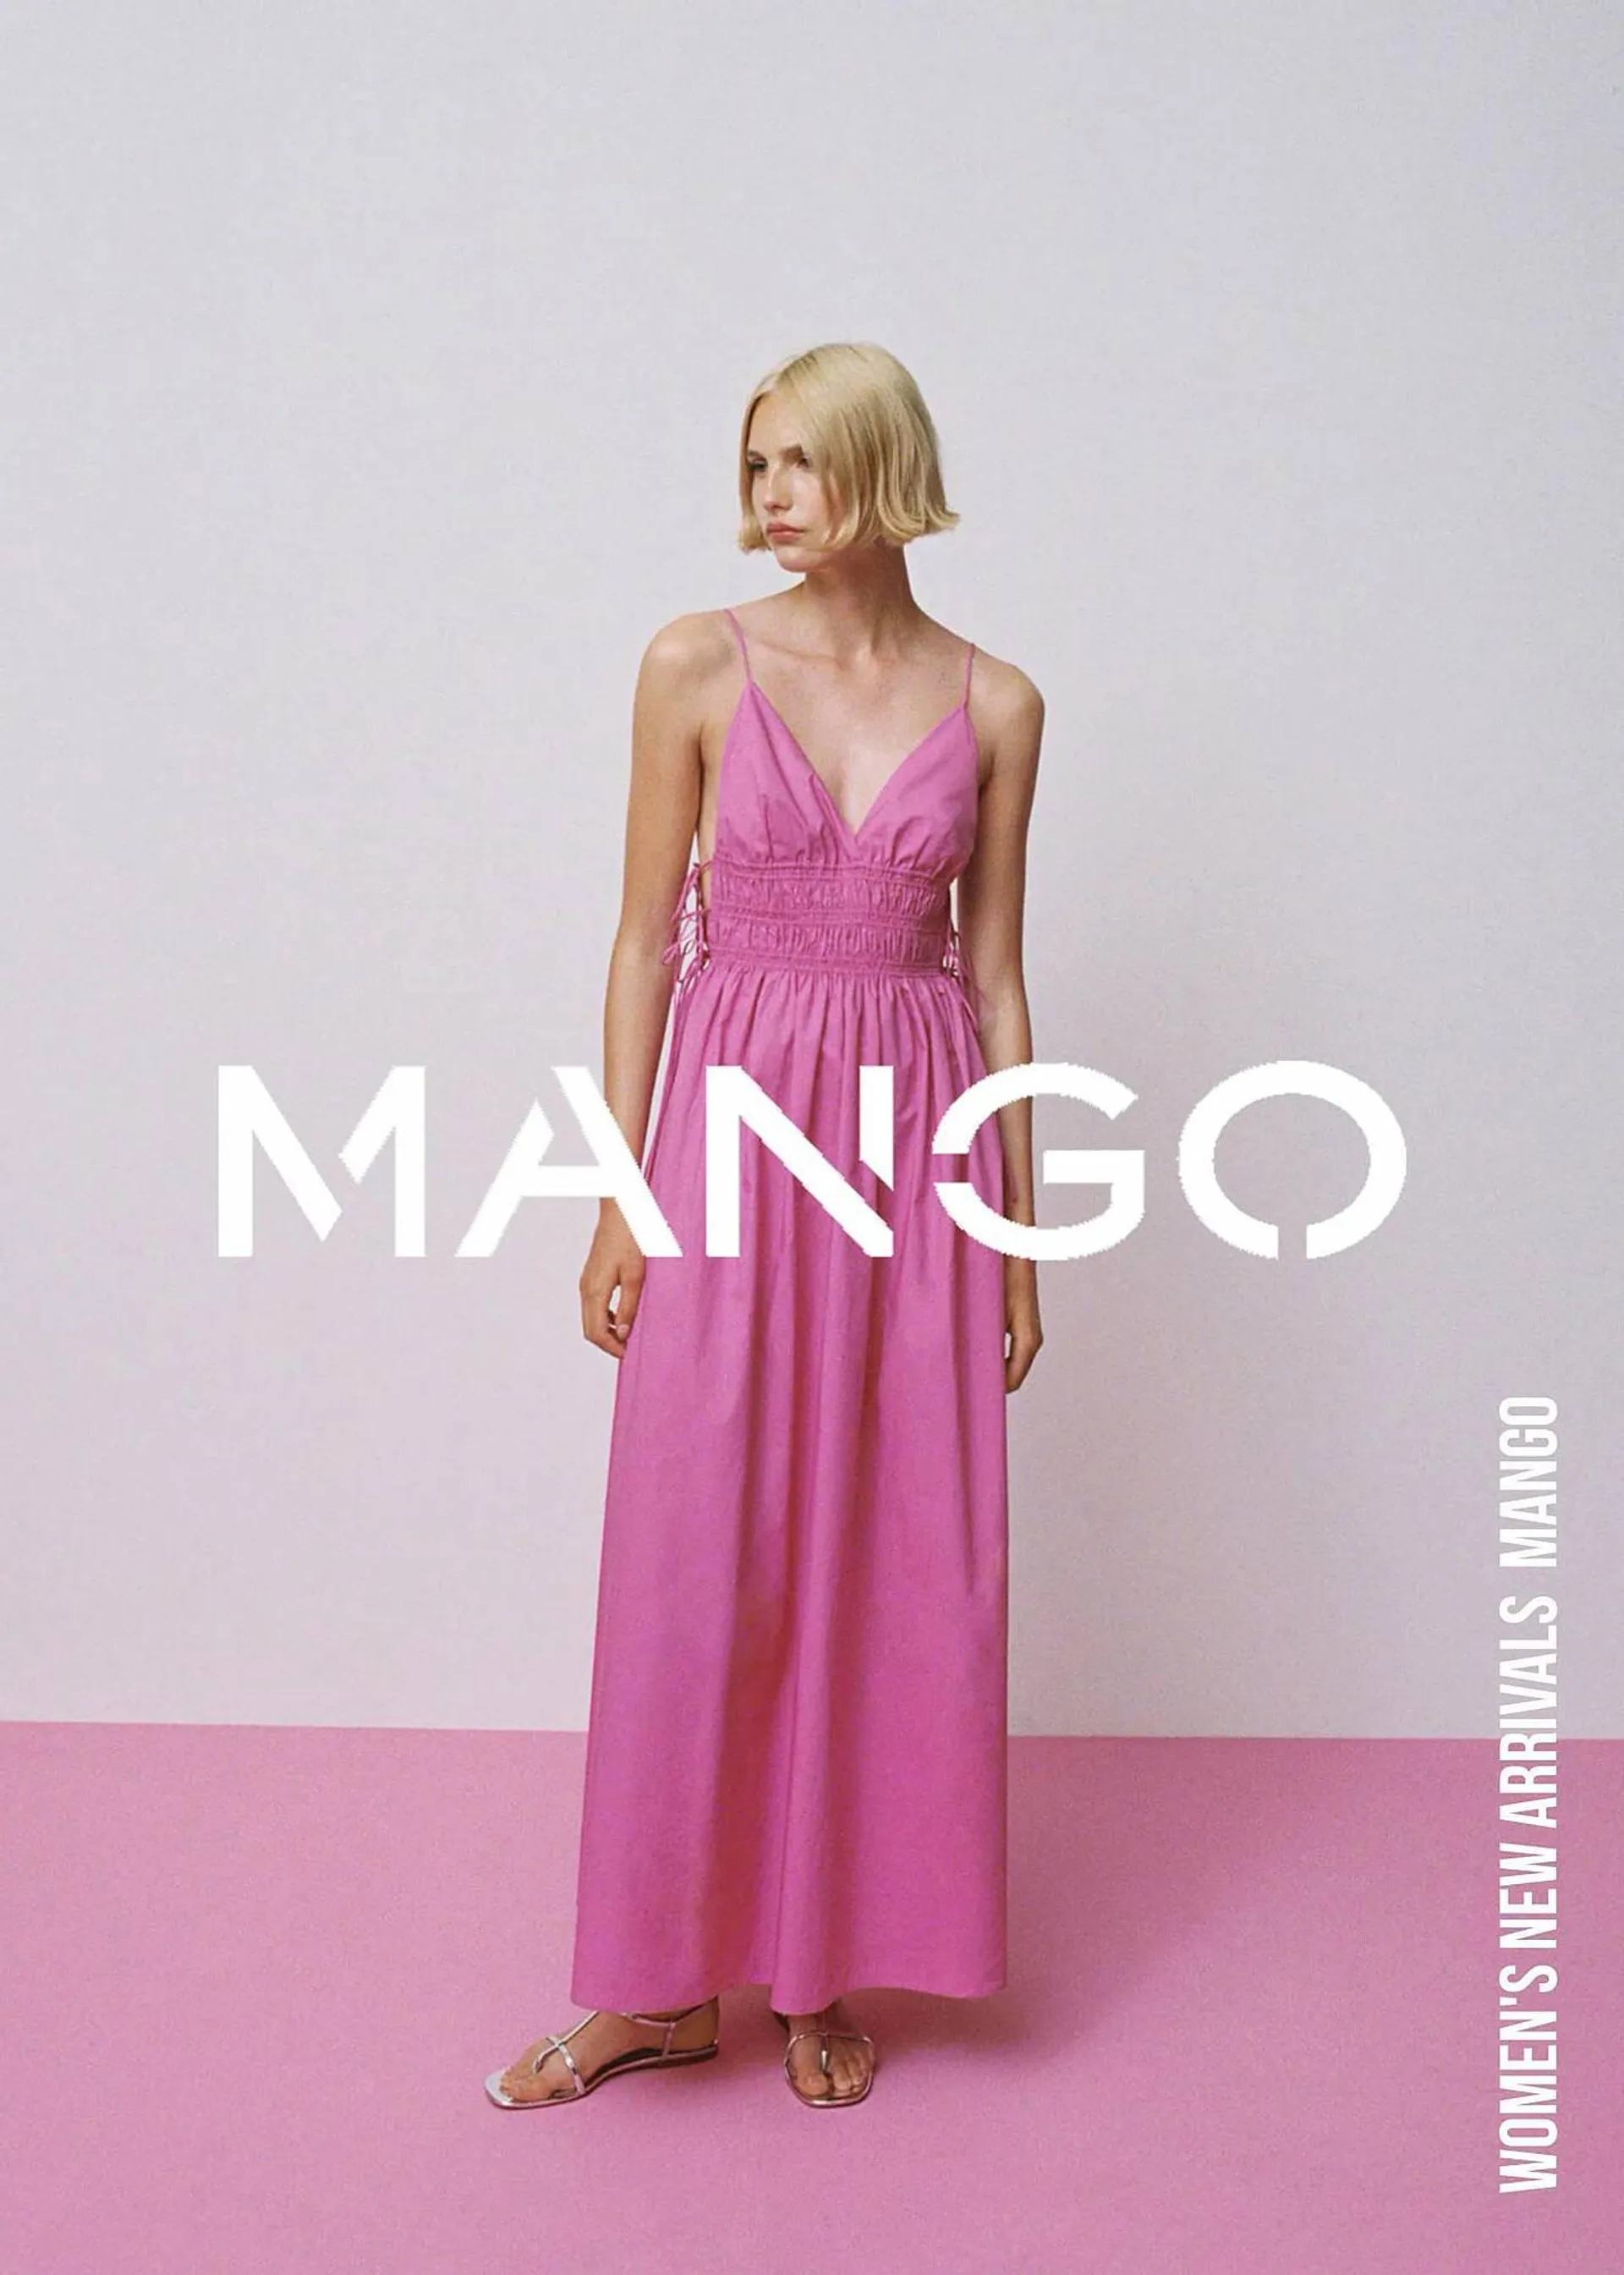 Mango catalogue